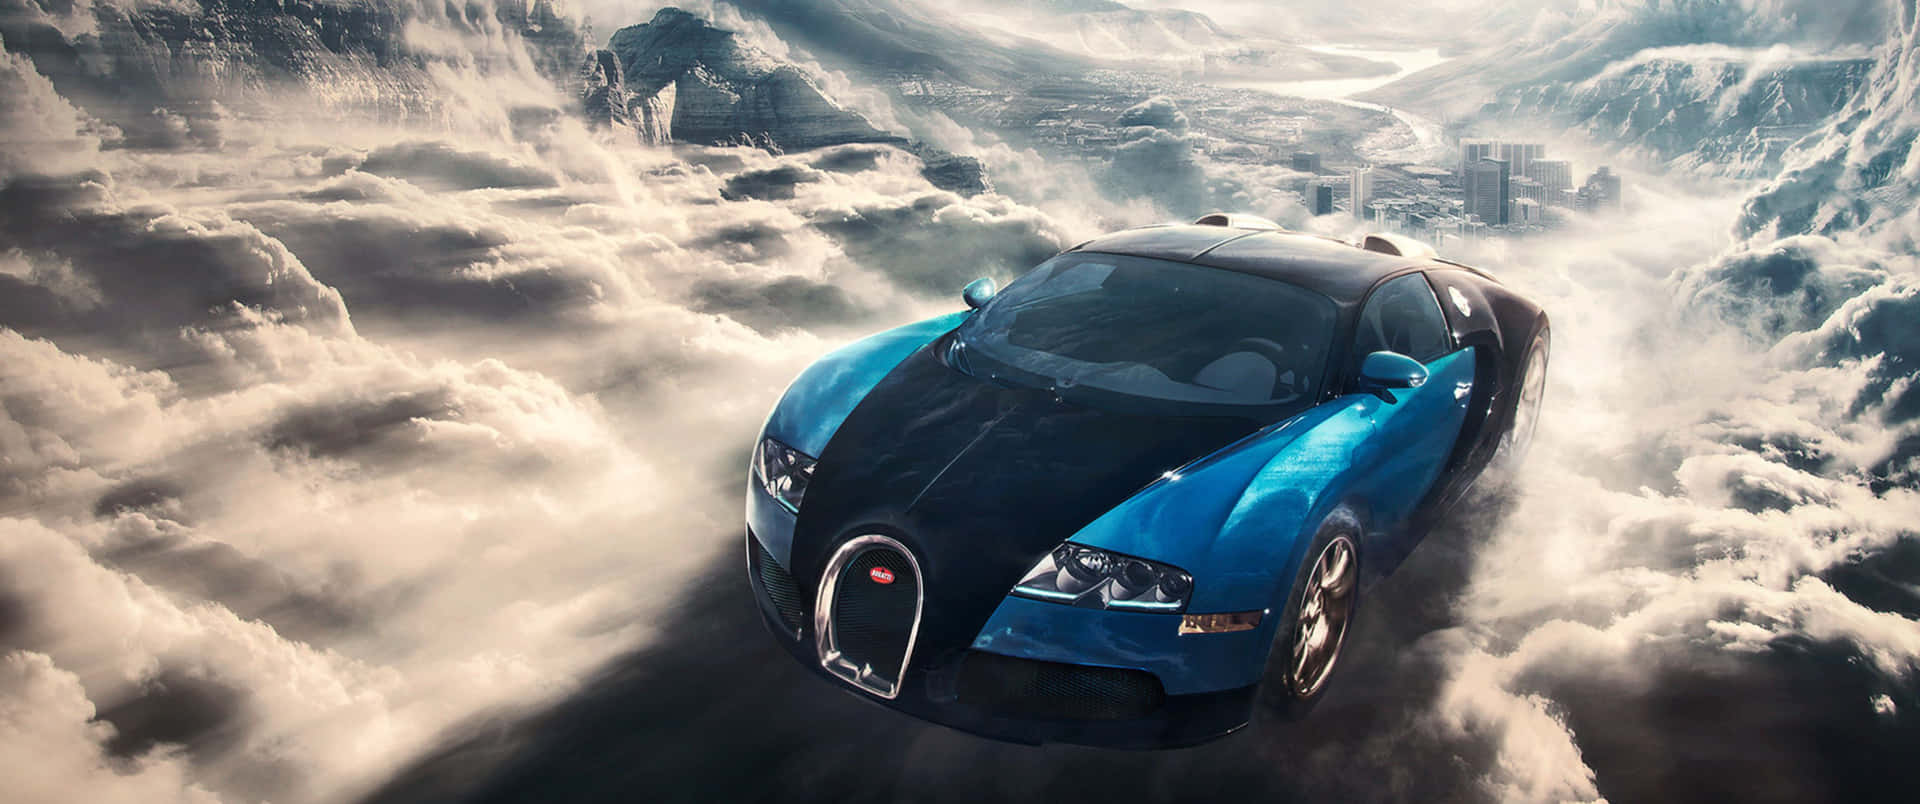 The Majesty and Magnificence of a Bugatti Super Sports Car